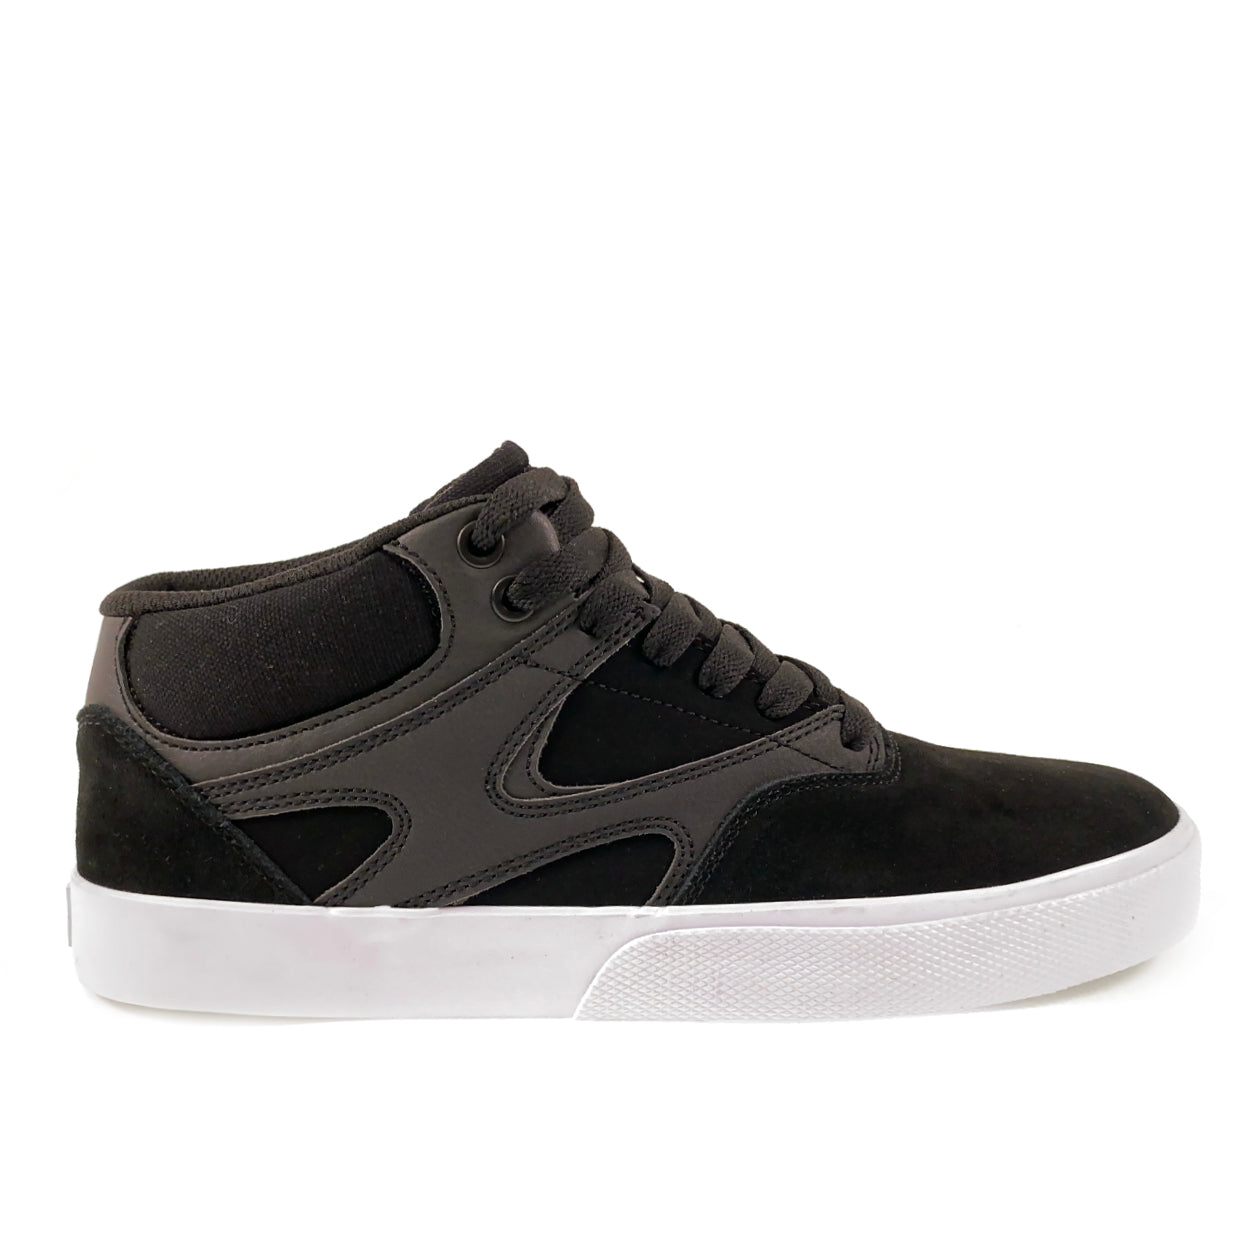 DC Shoes Kalis Vulc Mid Leather Skate Shoes - Black / Black / White - Prime Delux Store